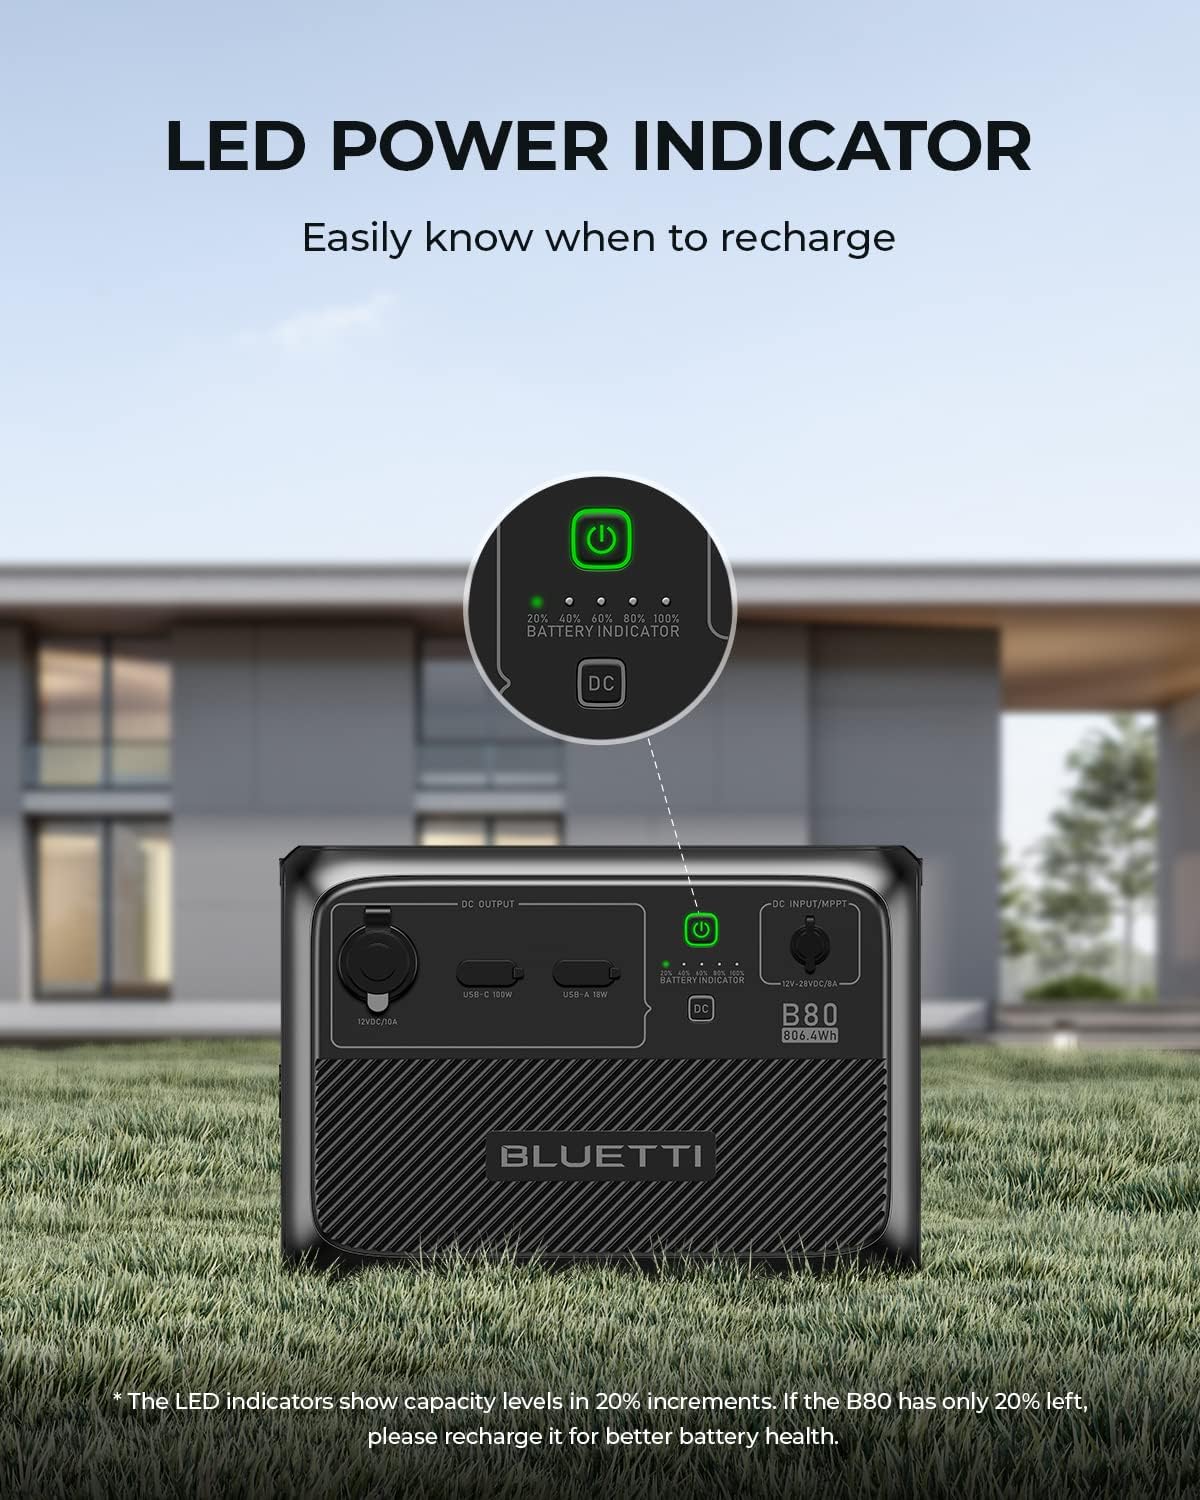 BLUETTI B80 Portable Power Station 806Wh LiFePO4 Expansion Battery AC Solar Generator